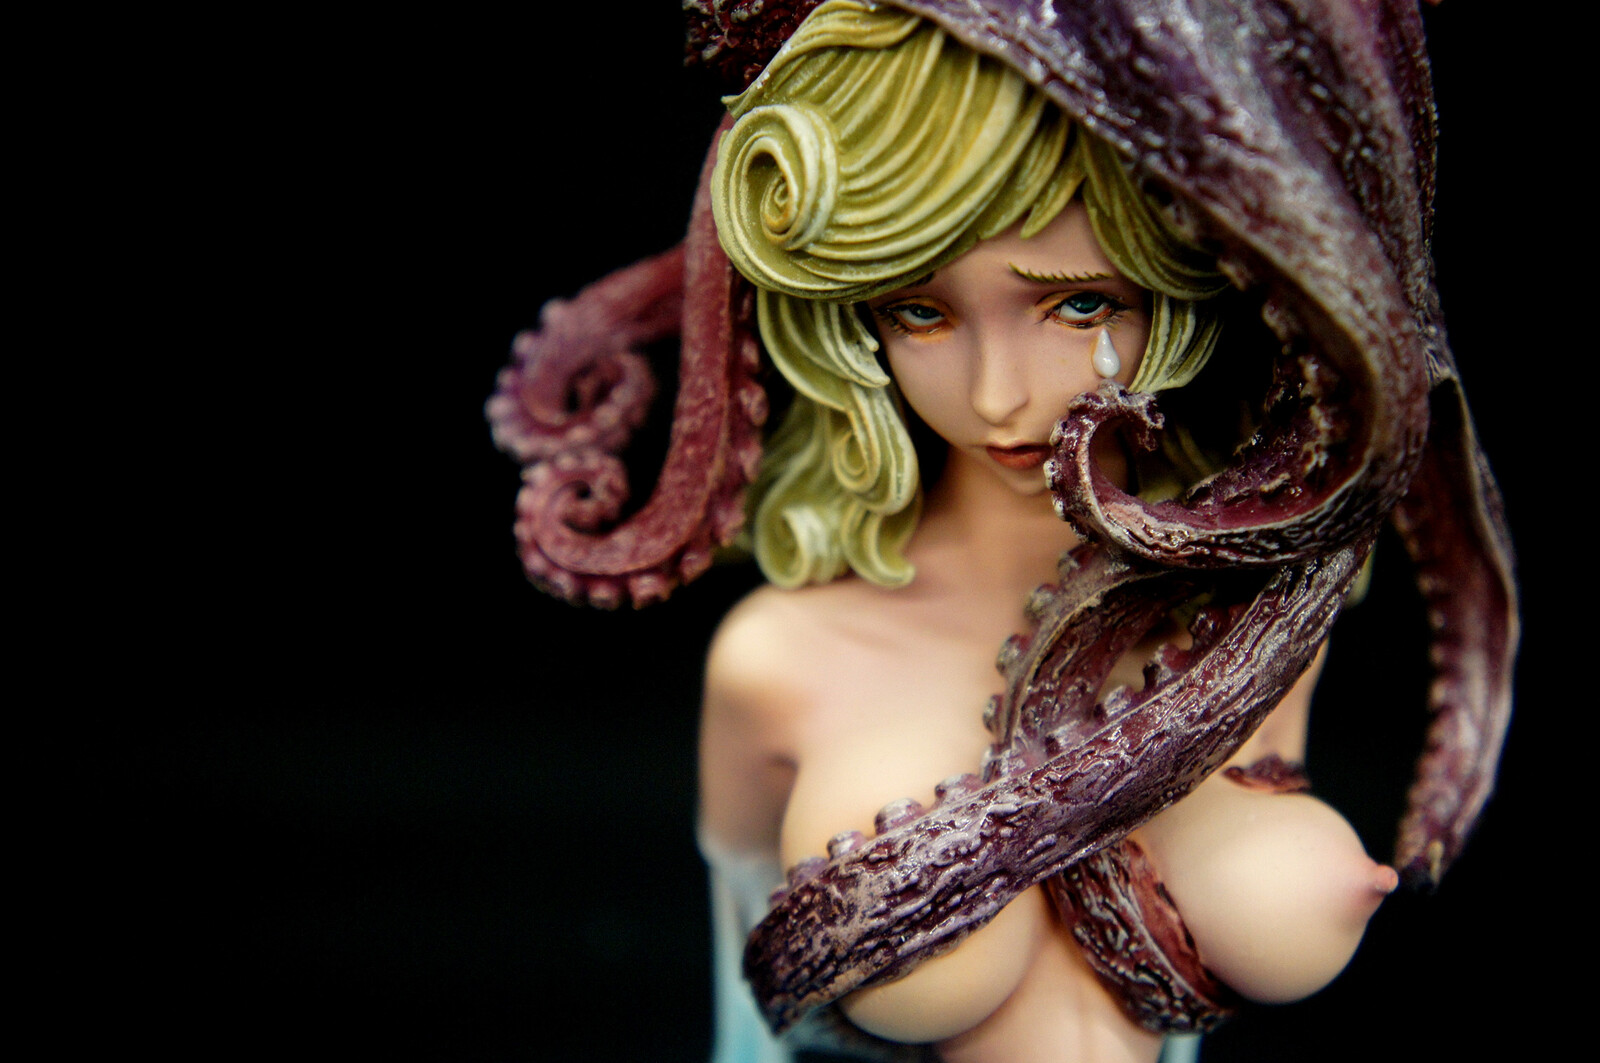 Sorrow Octopus  Art Statue 
哀ちゃん